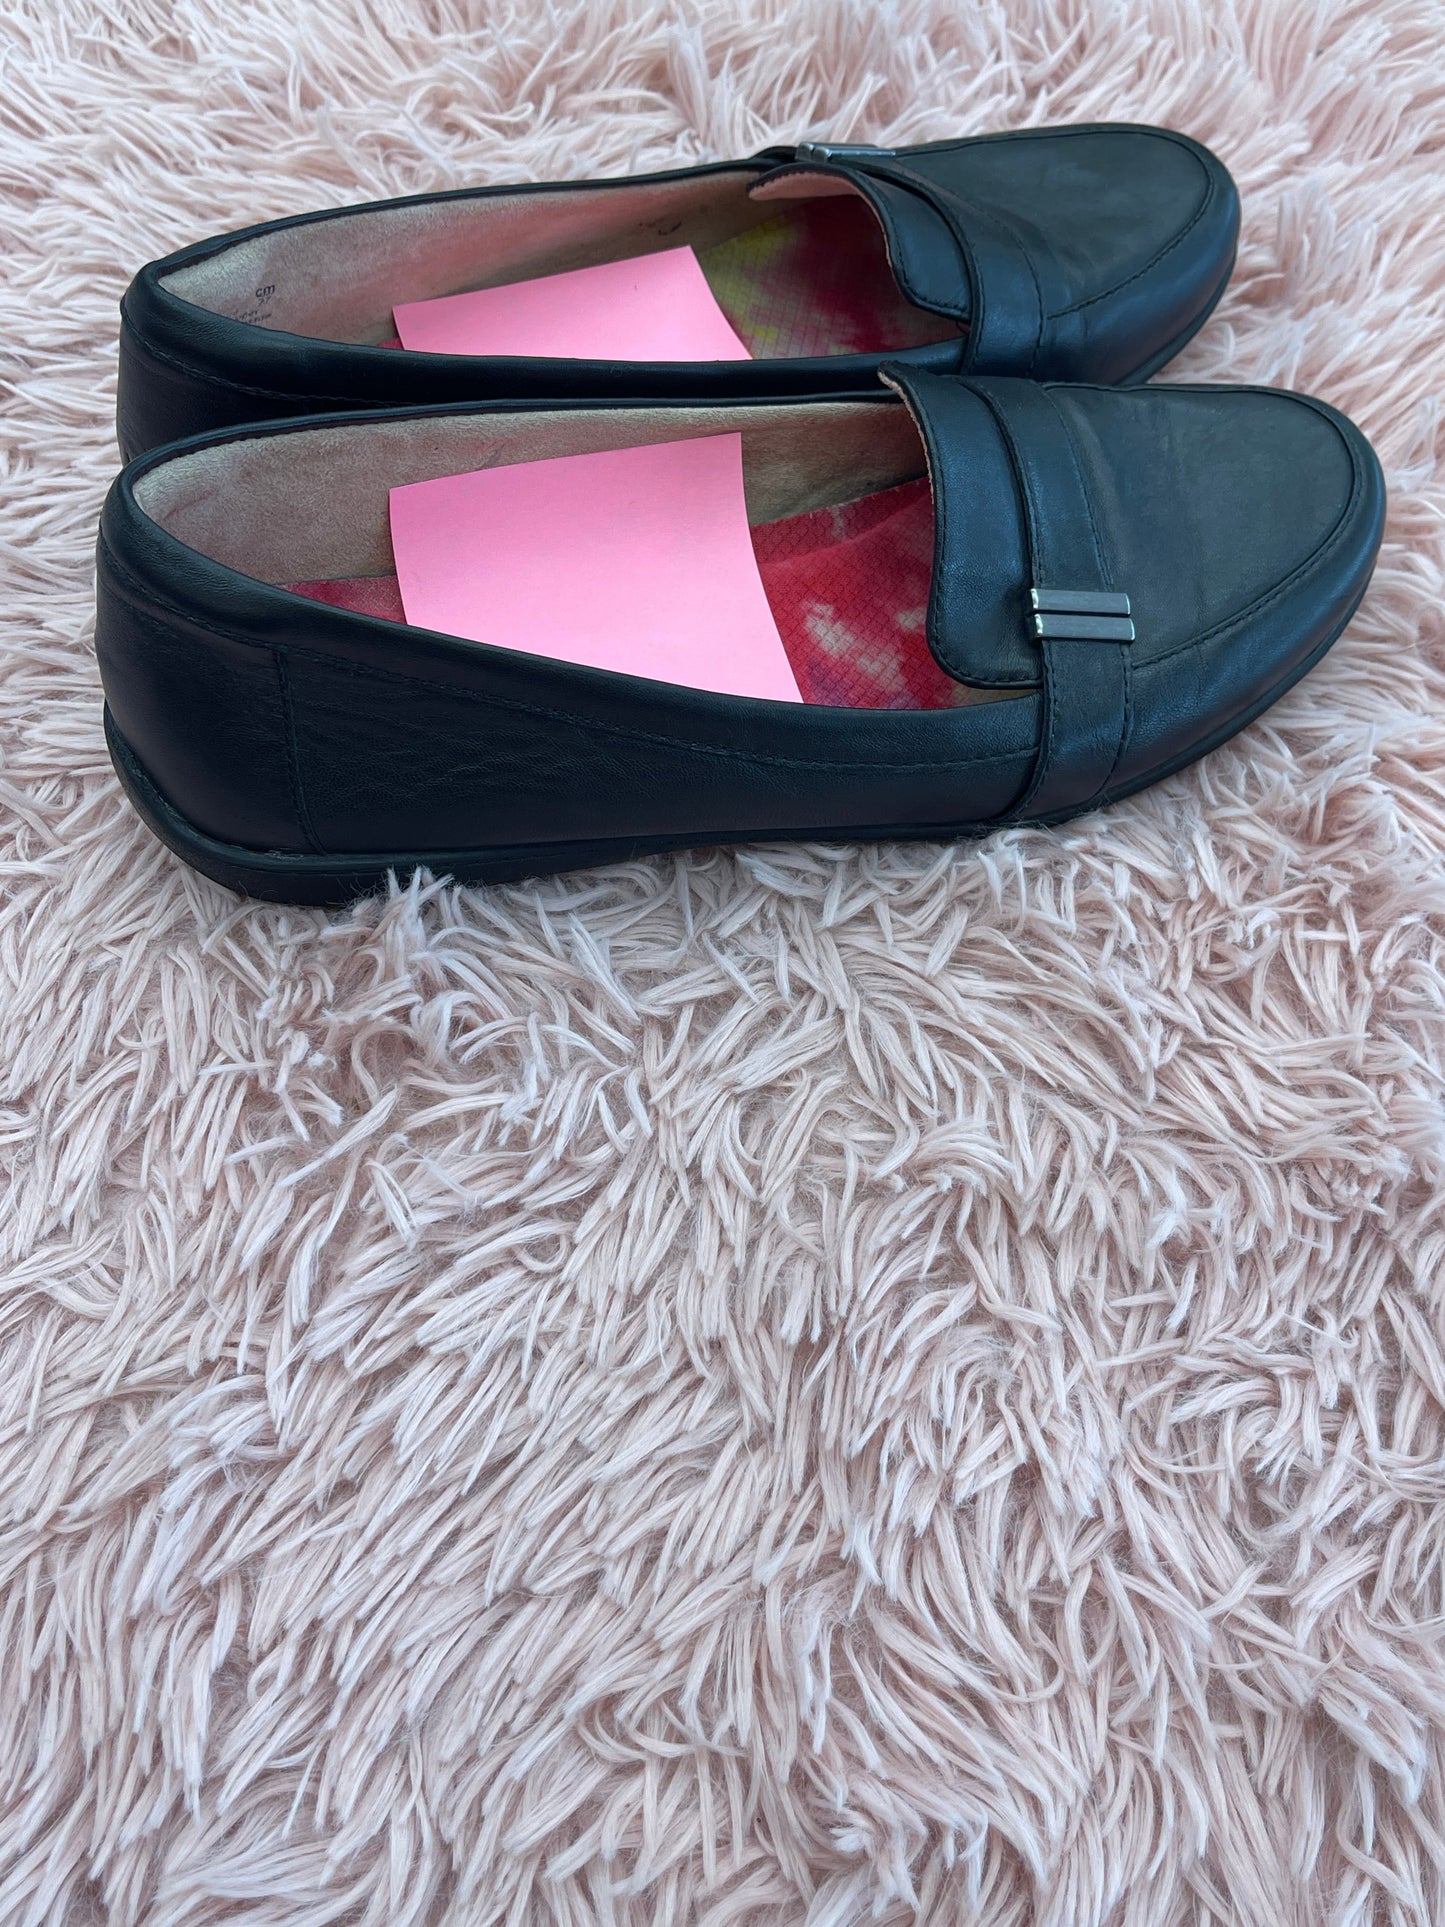 Black Shoes Flats Loafer Oxford Skechers, Size 10